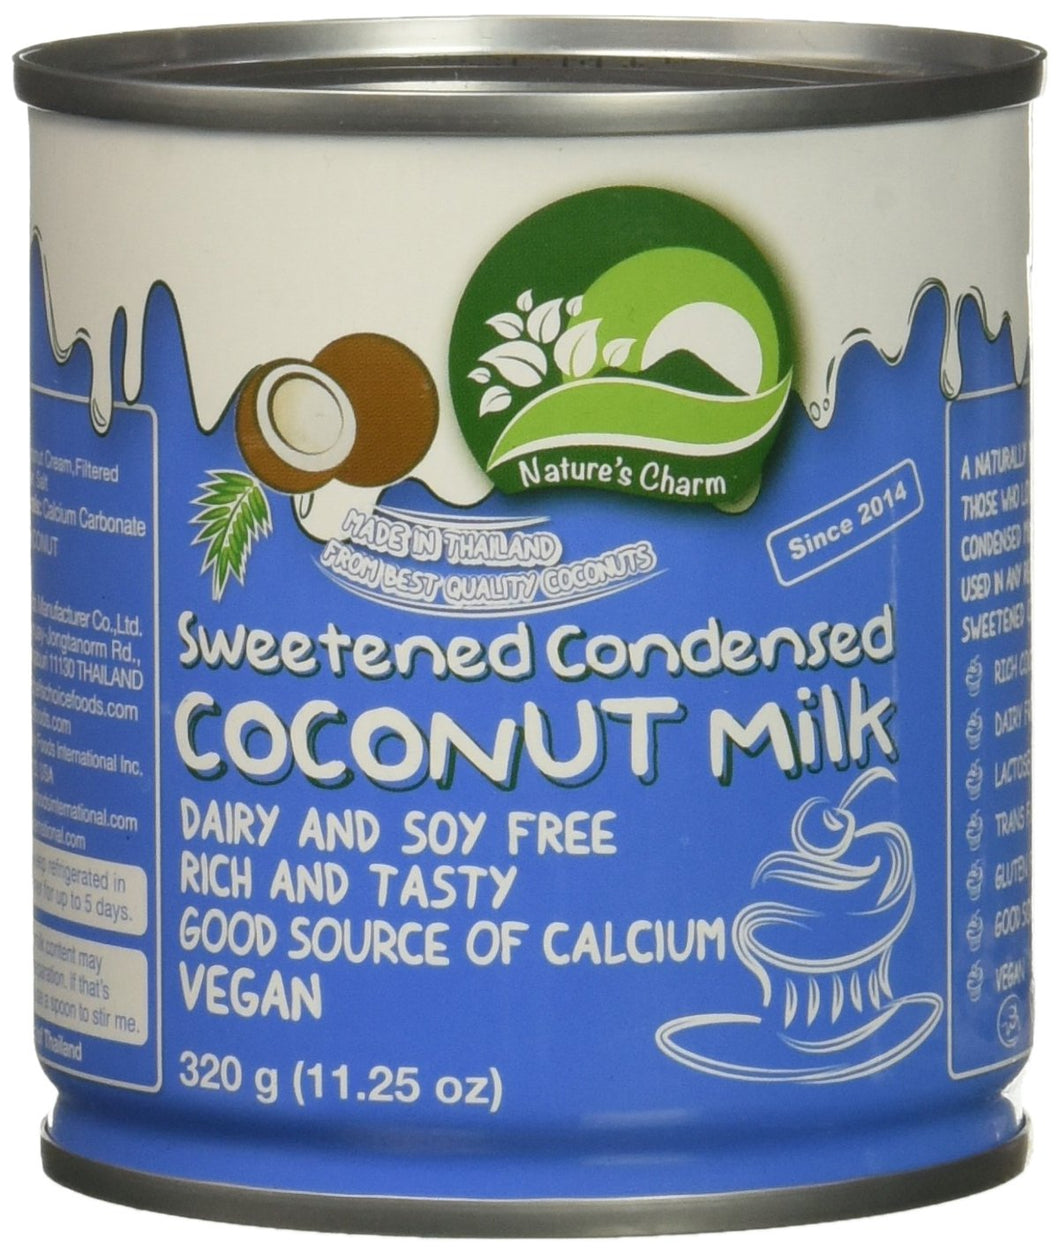 Nature's Charm - Sweetened Condensed Coconut Milk (Vegan) - นมมะพร้าวข้นหวาน